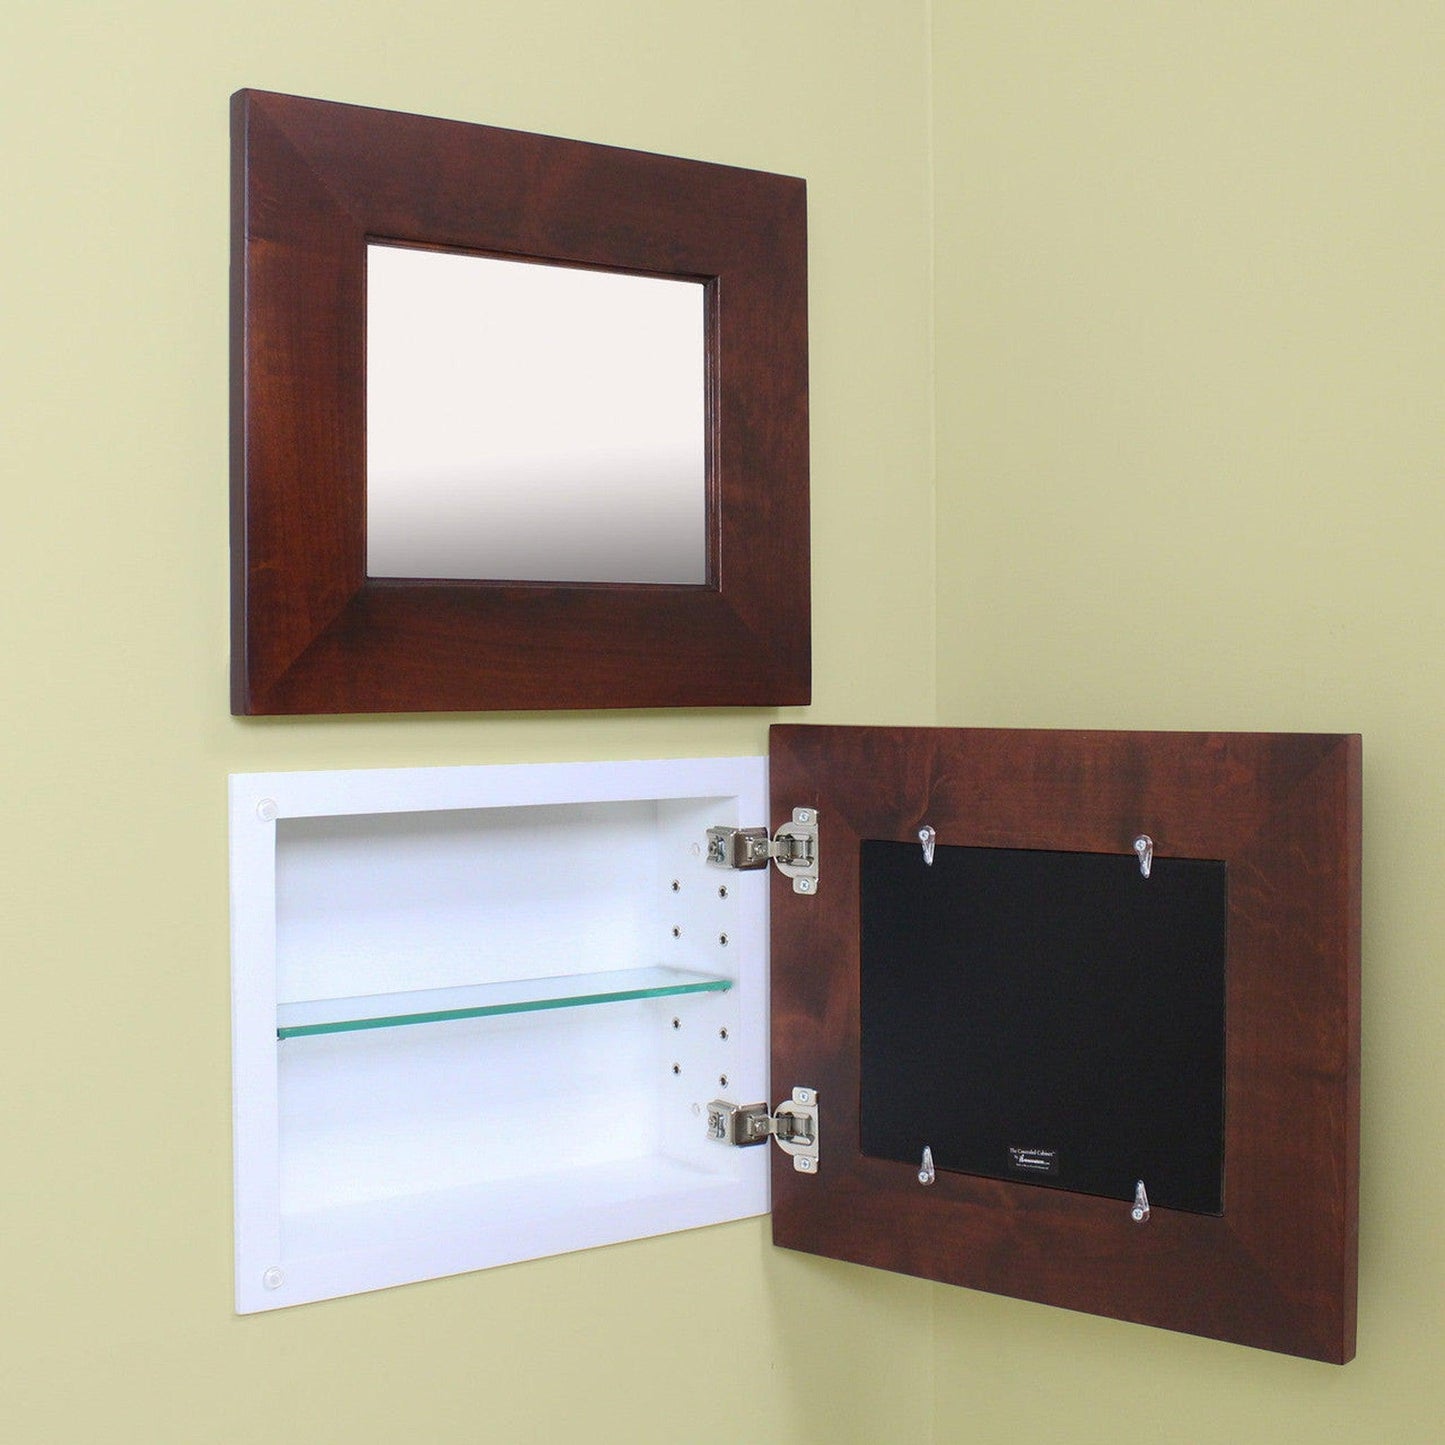 Fox Hollow Furnishings 14" x 11" Landscape Espresso Standard 4" Depth Mirrored Medicine Cabinet